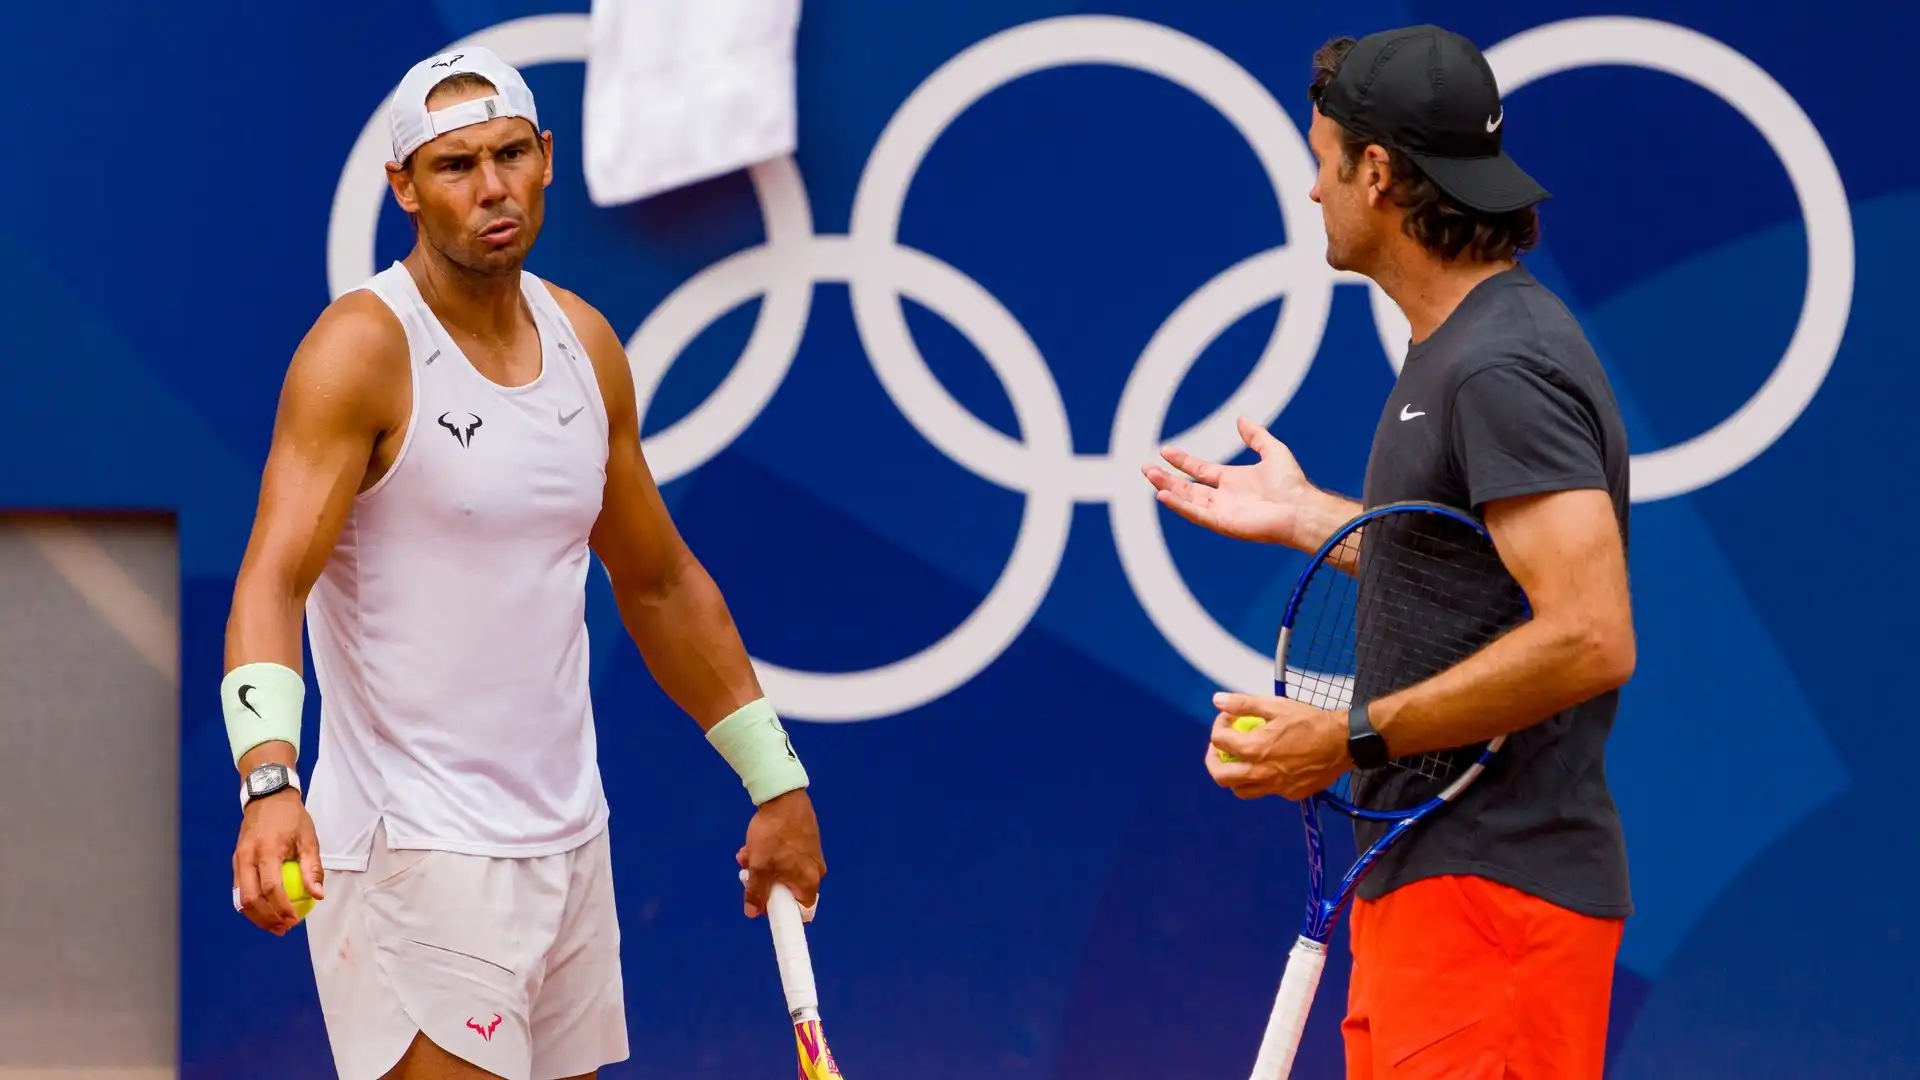 Olimpiadi Parigi 2024, Carlos Moya spaventa tutti su Rafael Nadal